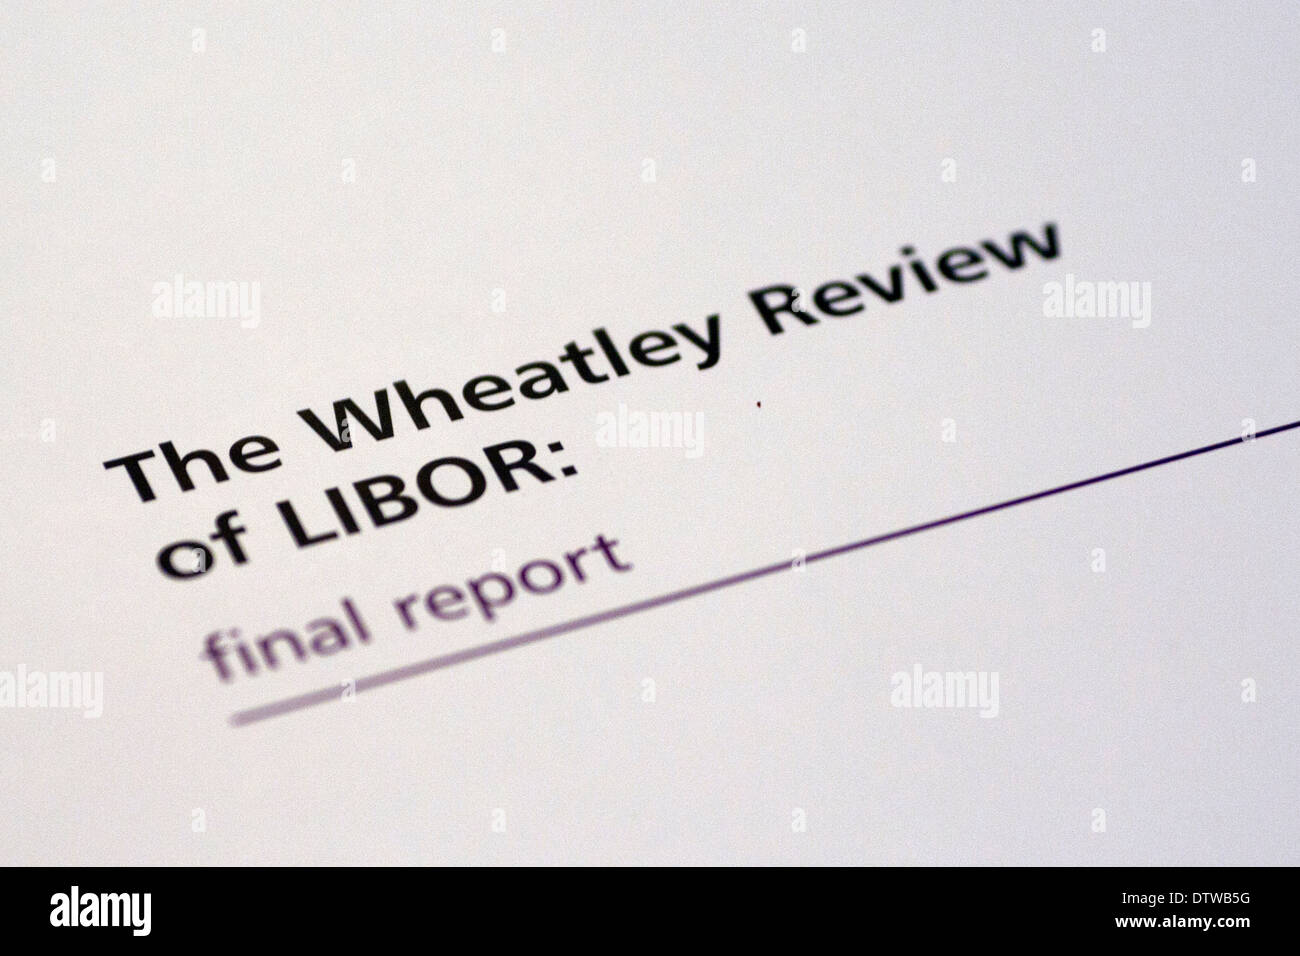 Die Wheatley Überprüfung der LIBOR Stockfoto